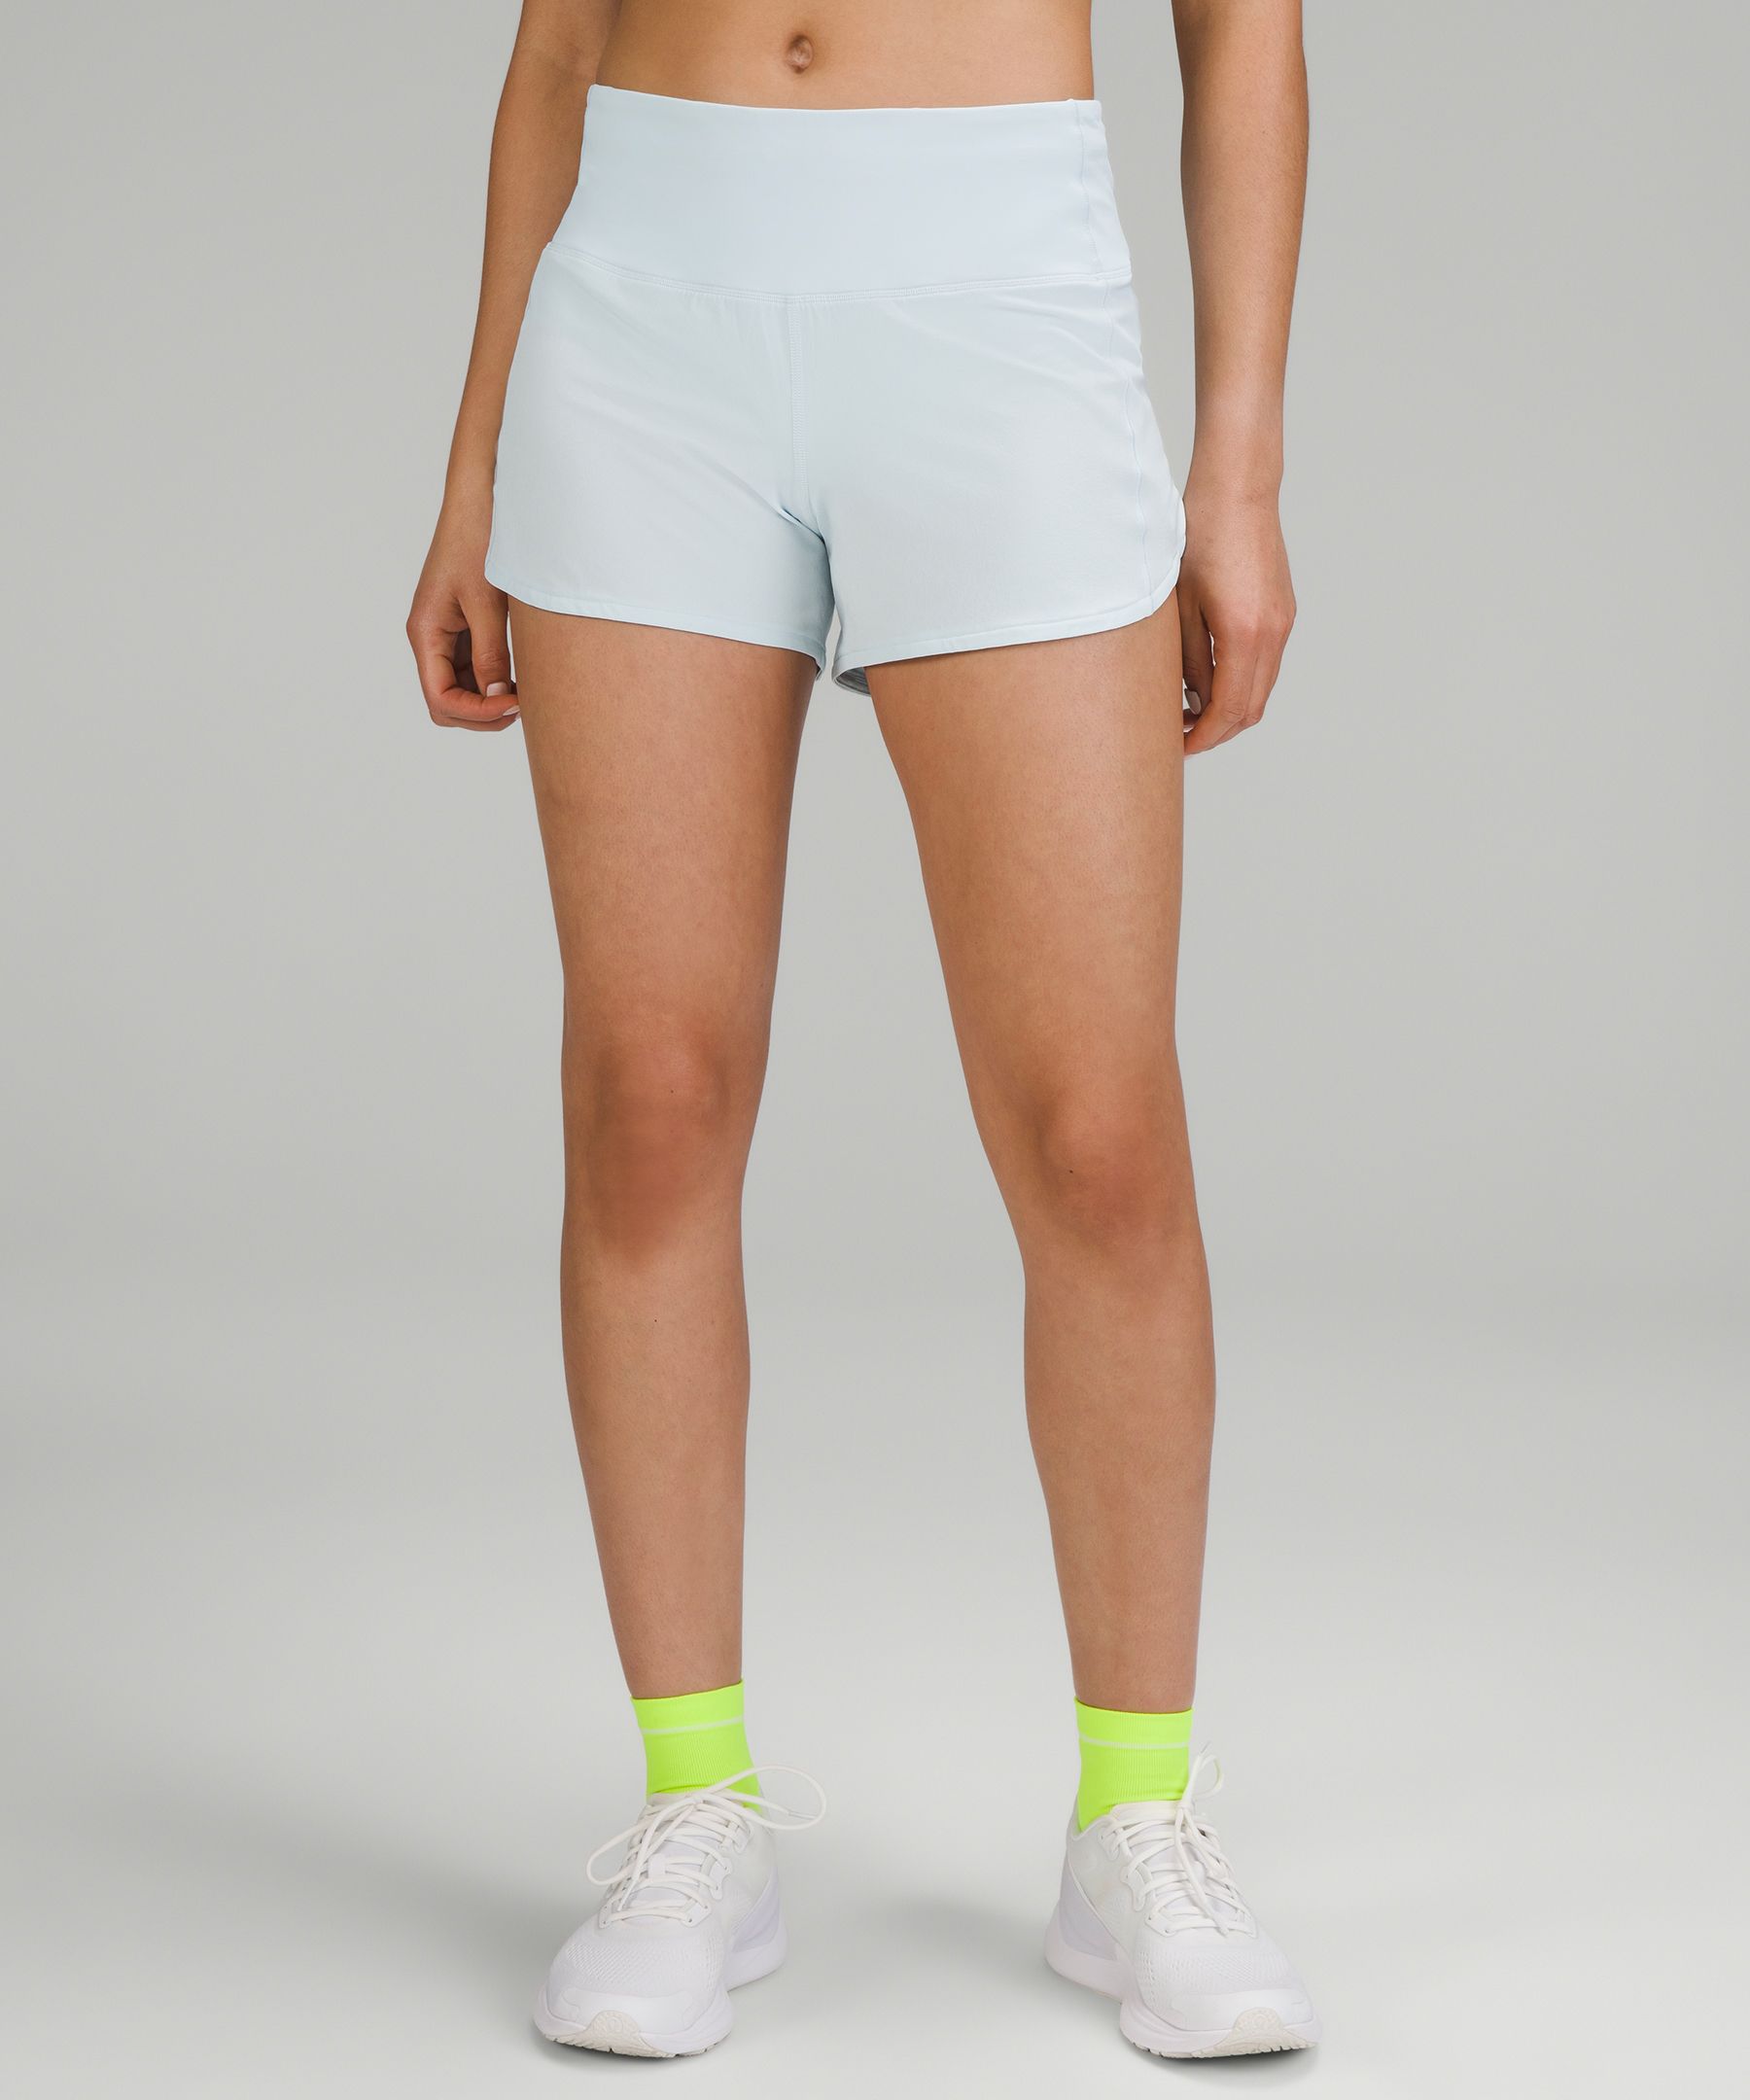 Lululemon Real Quick Shorts Women Size 4 Breezy Light Blue - $40